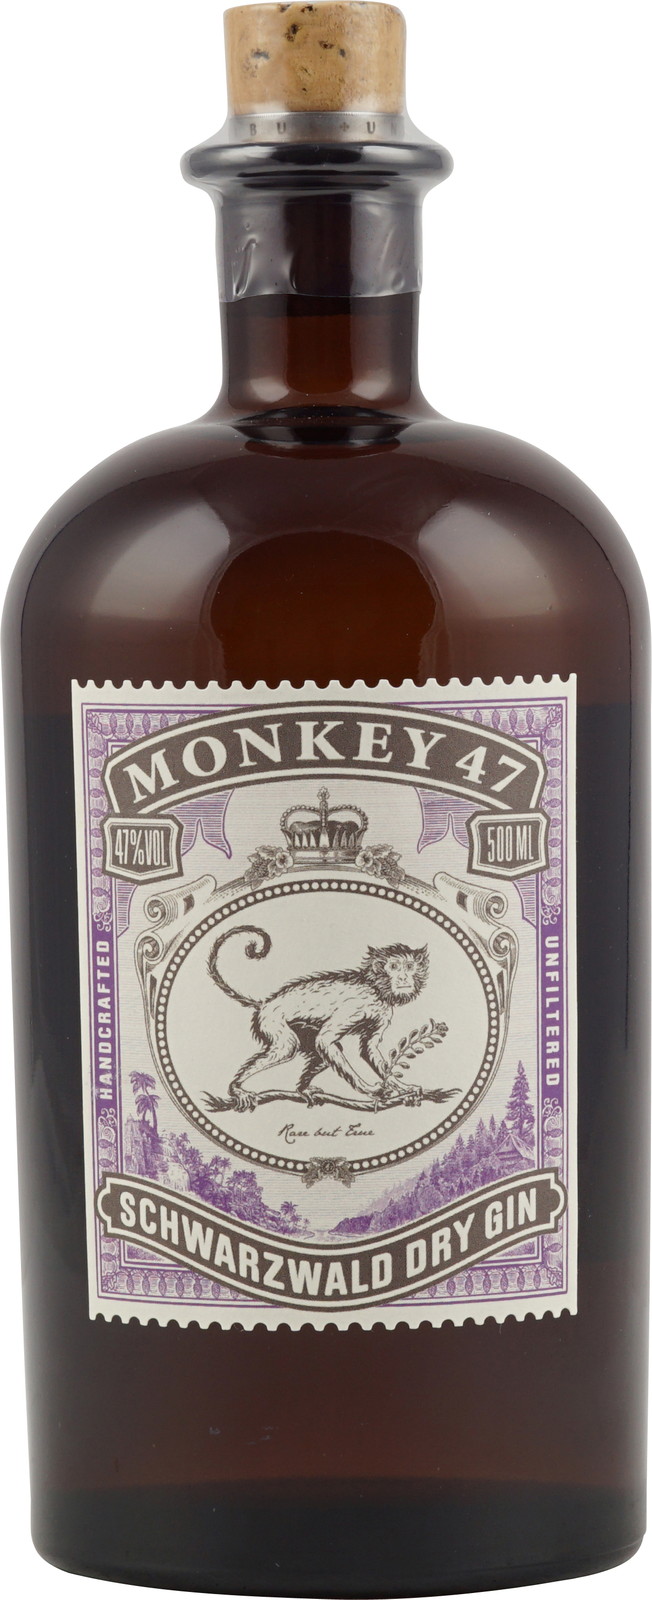 Monkey 47 Schwarzwald Dry Gin in Holzkiste 0,5l 47%